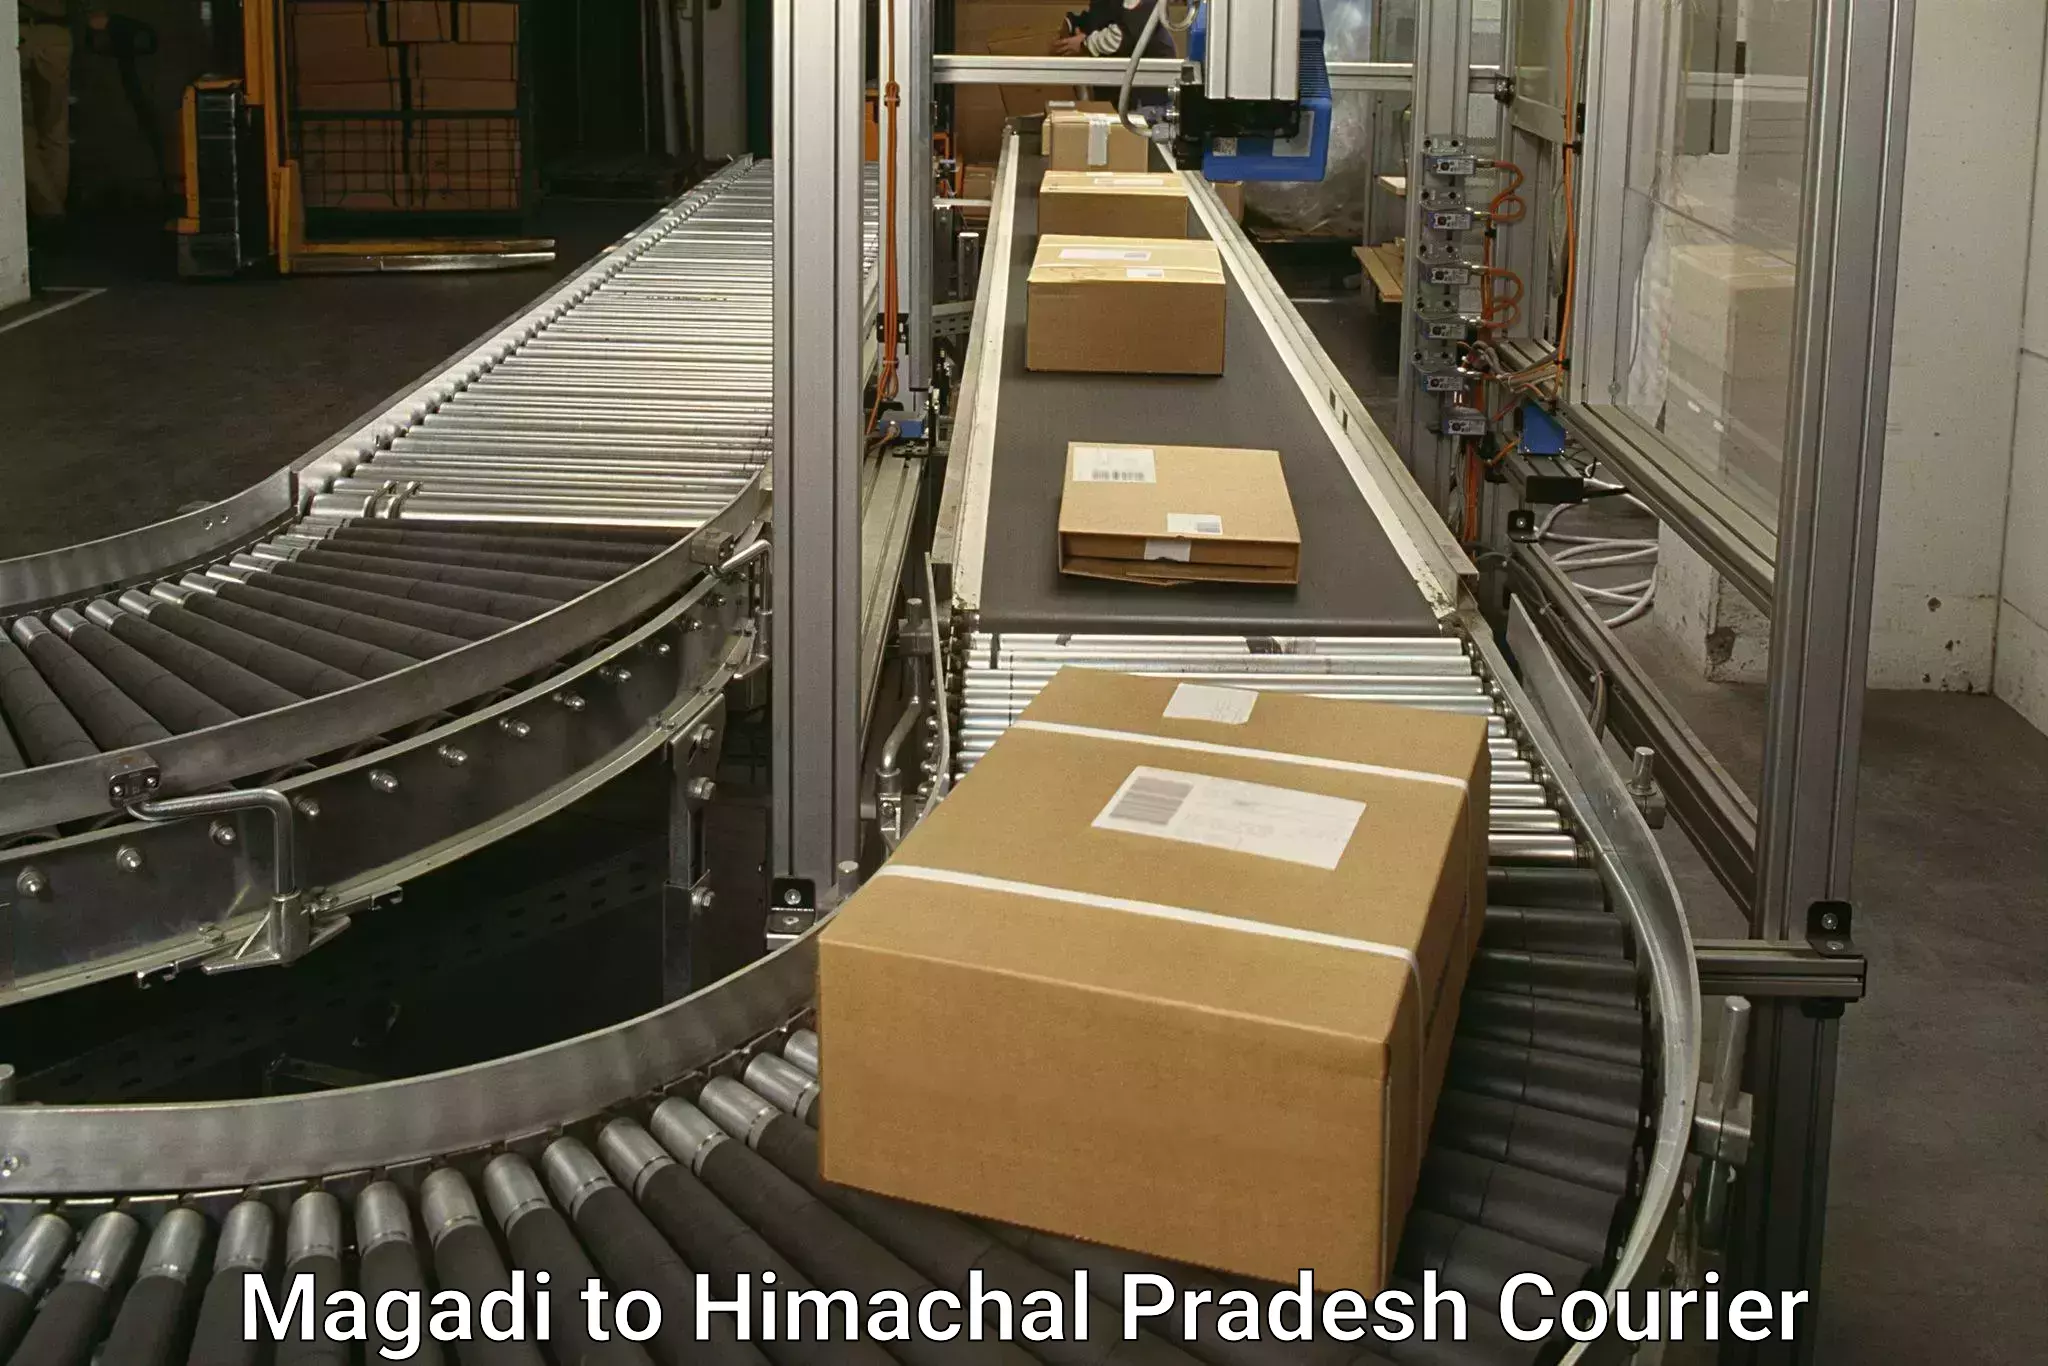 State-of-the-art courier technology Magadi to Jukhala